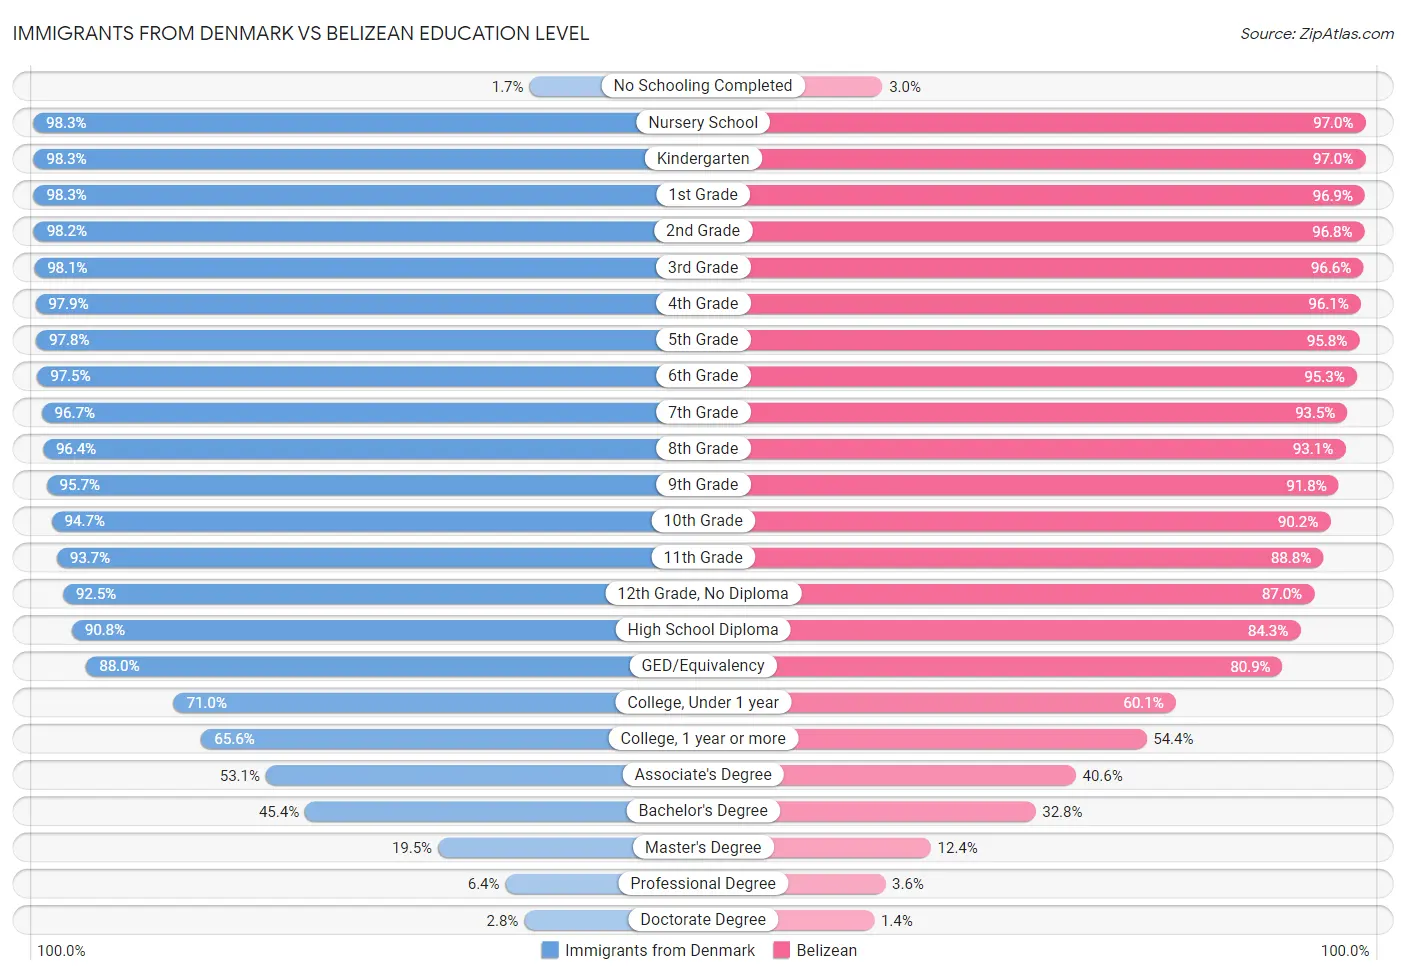 Immigrants from Denmark vs Belizean Education Level